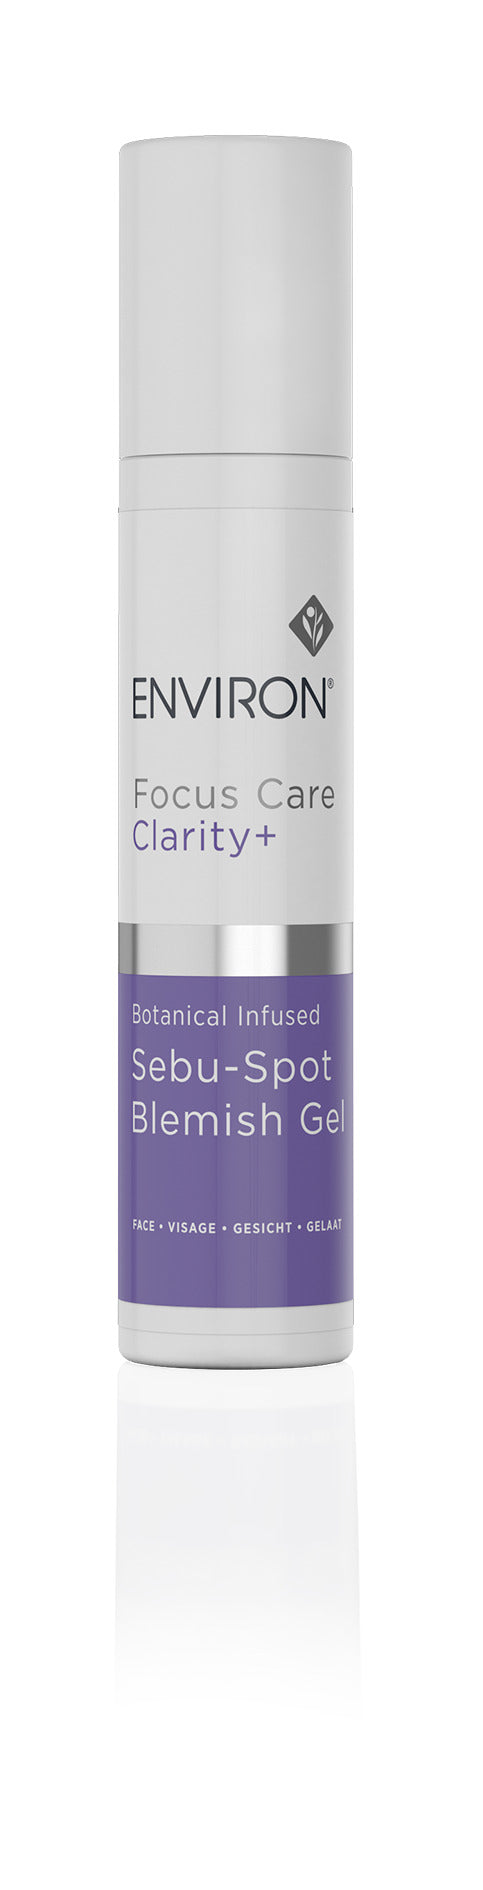 Environ Focus Care CLARITY+ Botanical Infused Sebu-Spot Blemish Gel